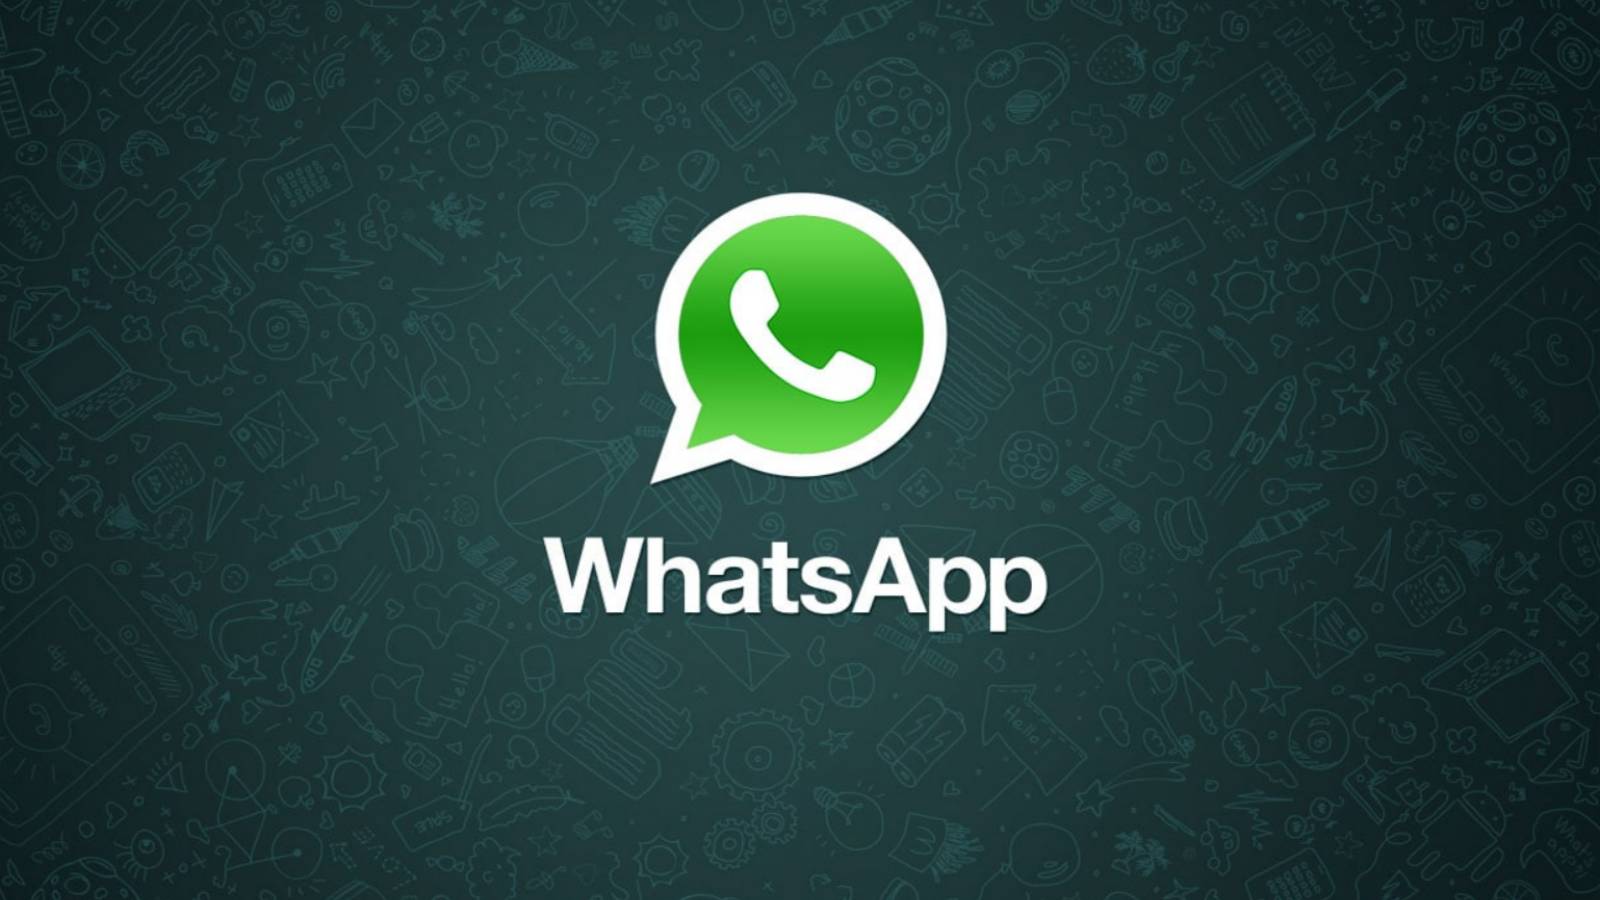 WhatsApp vremelnic